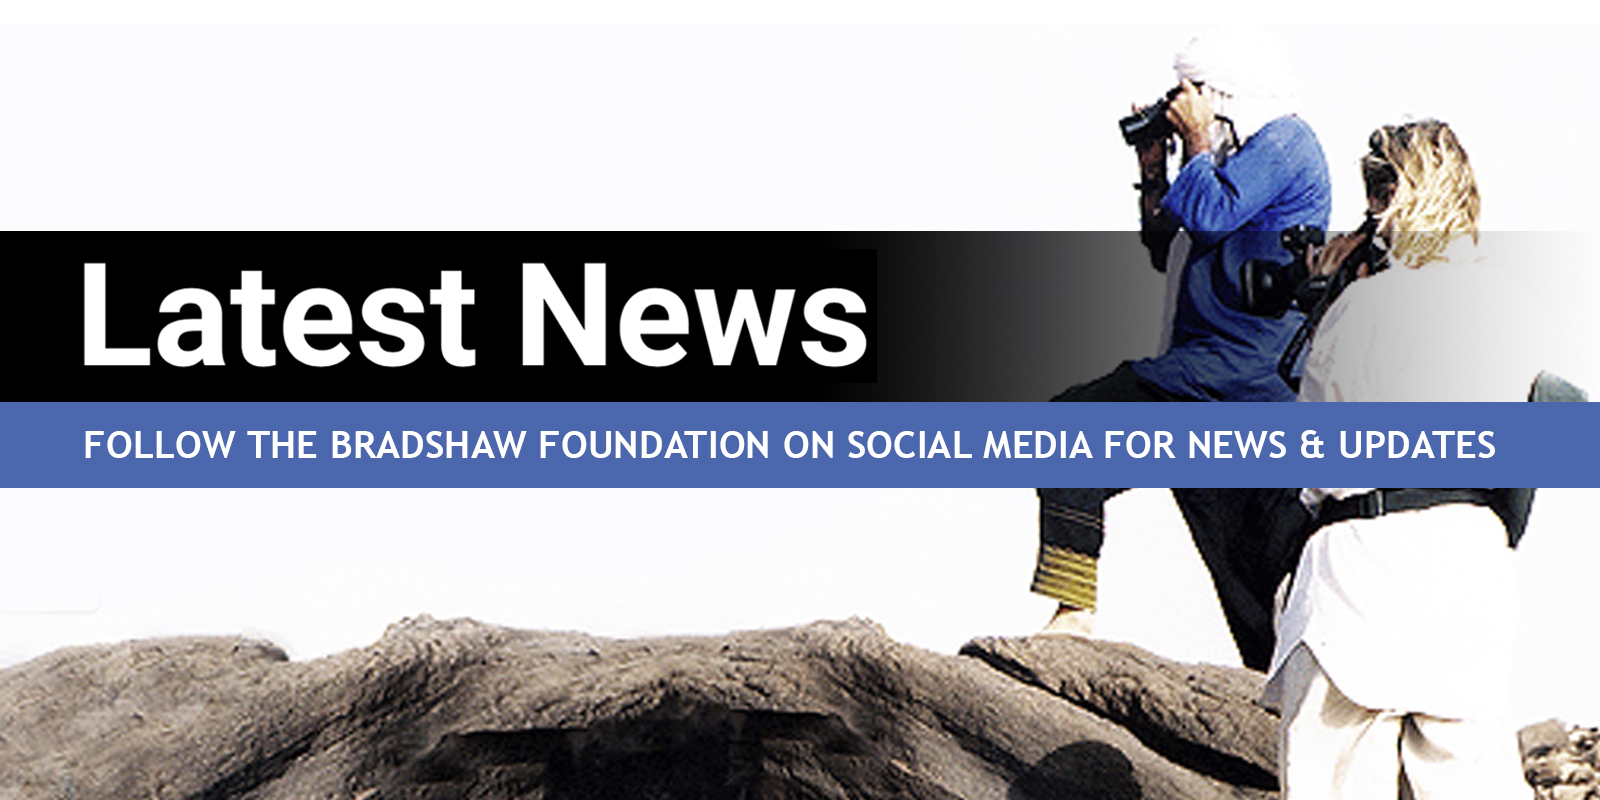 Bradshaw Foundation World Heritage News